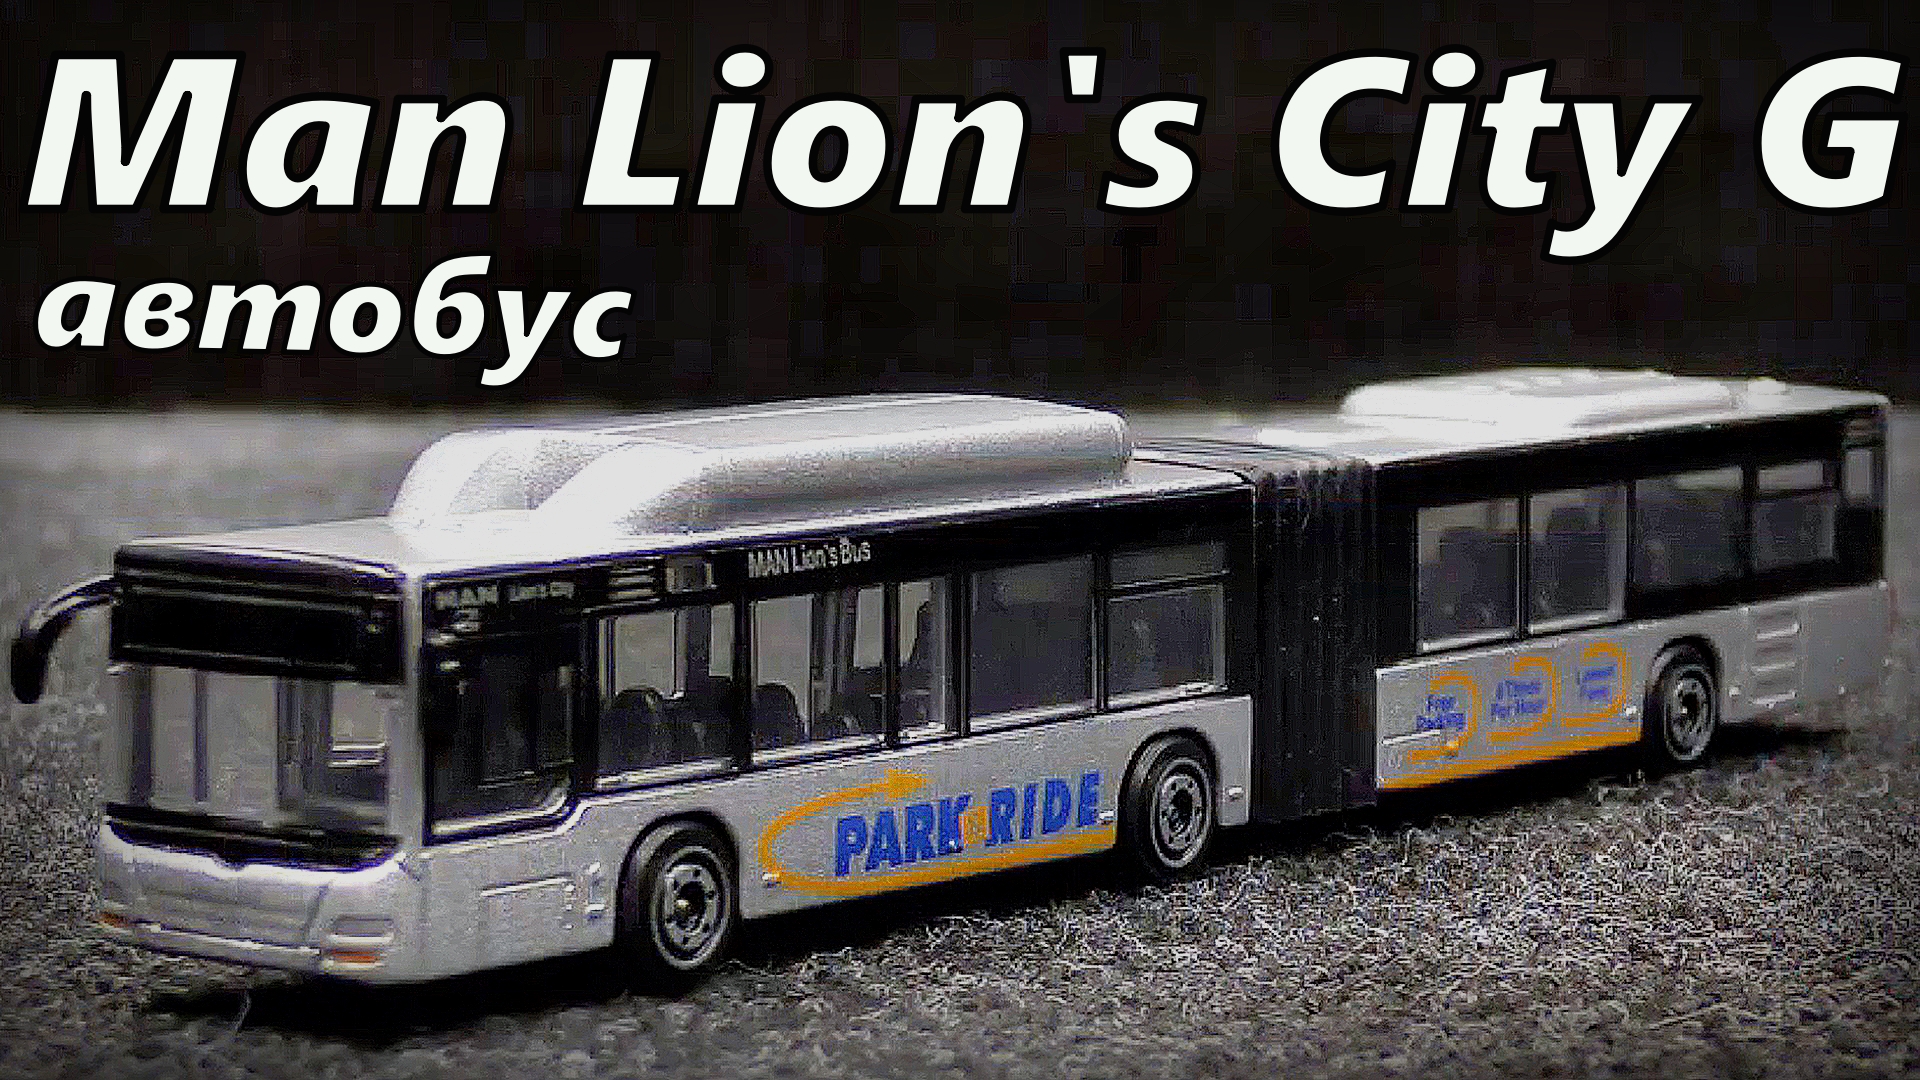 Man Lion's City G автобус Модель машины Масштаб 1:110 Majorette Мини-копия автомобиля